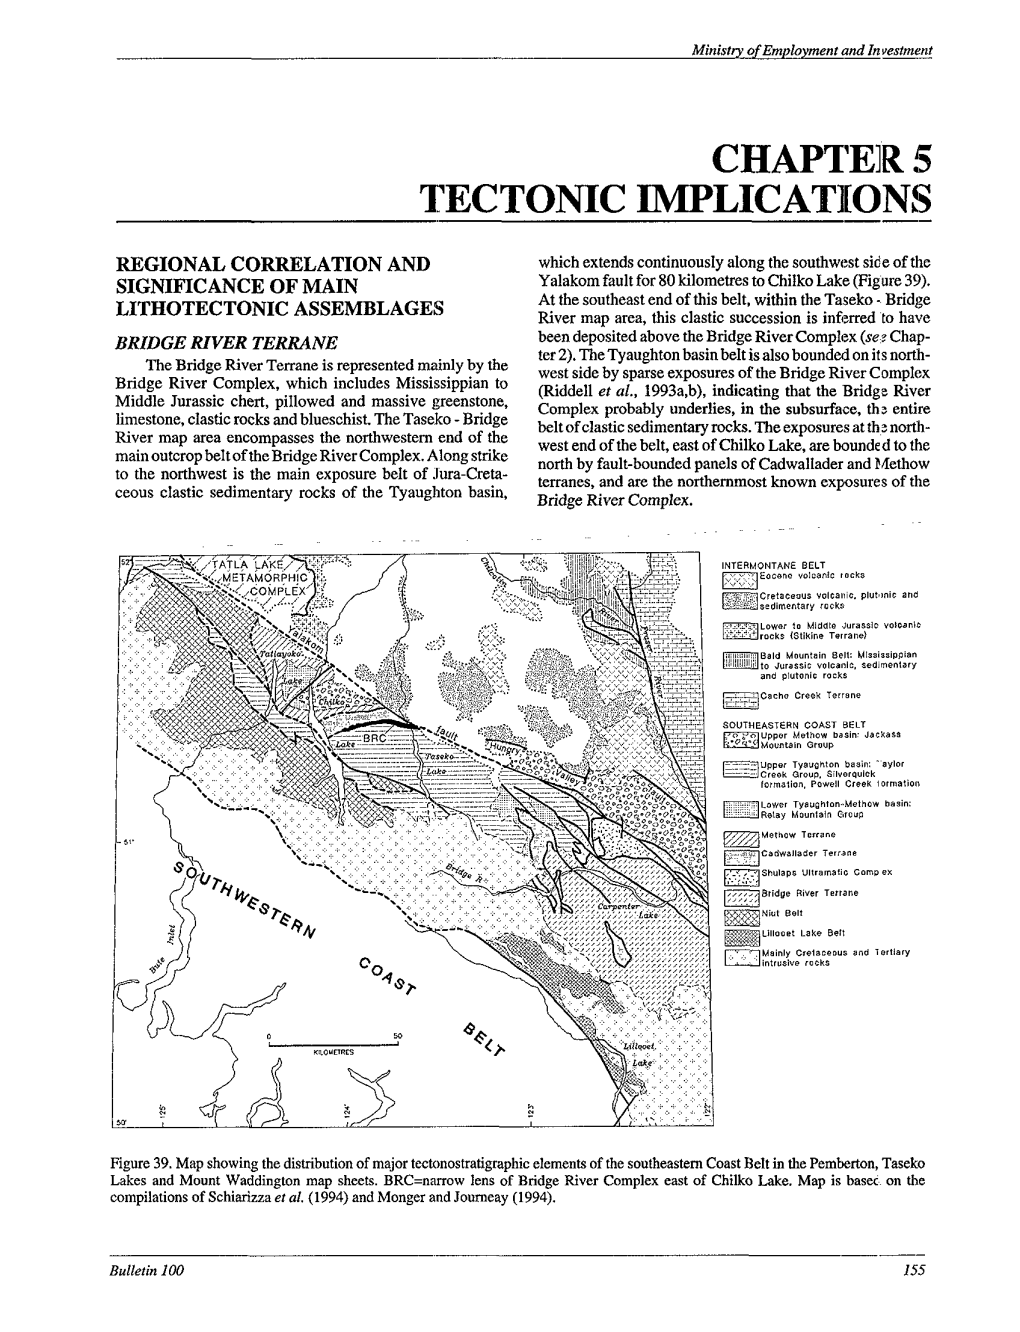 Chapteir 5 Tectonic Implications"